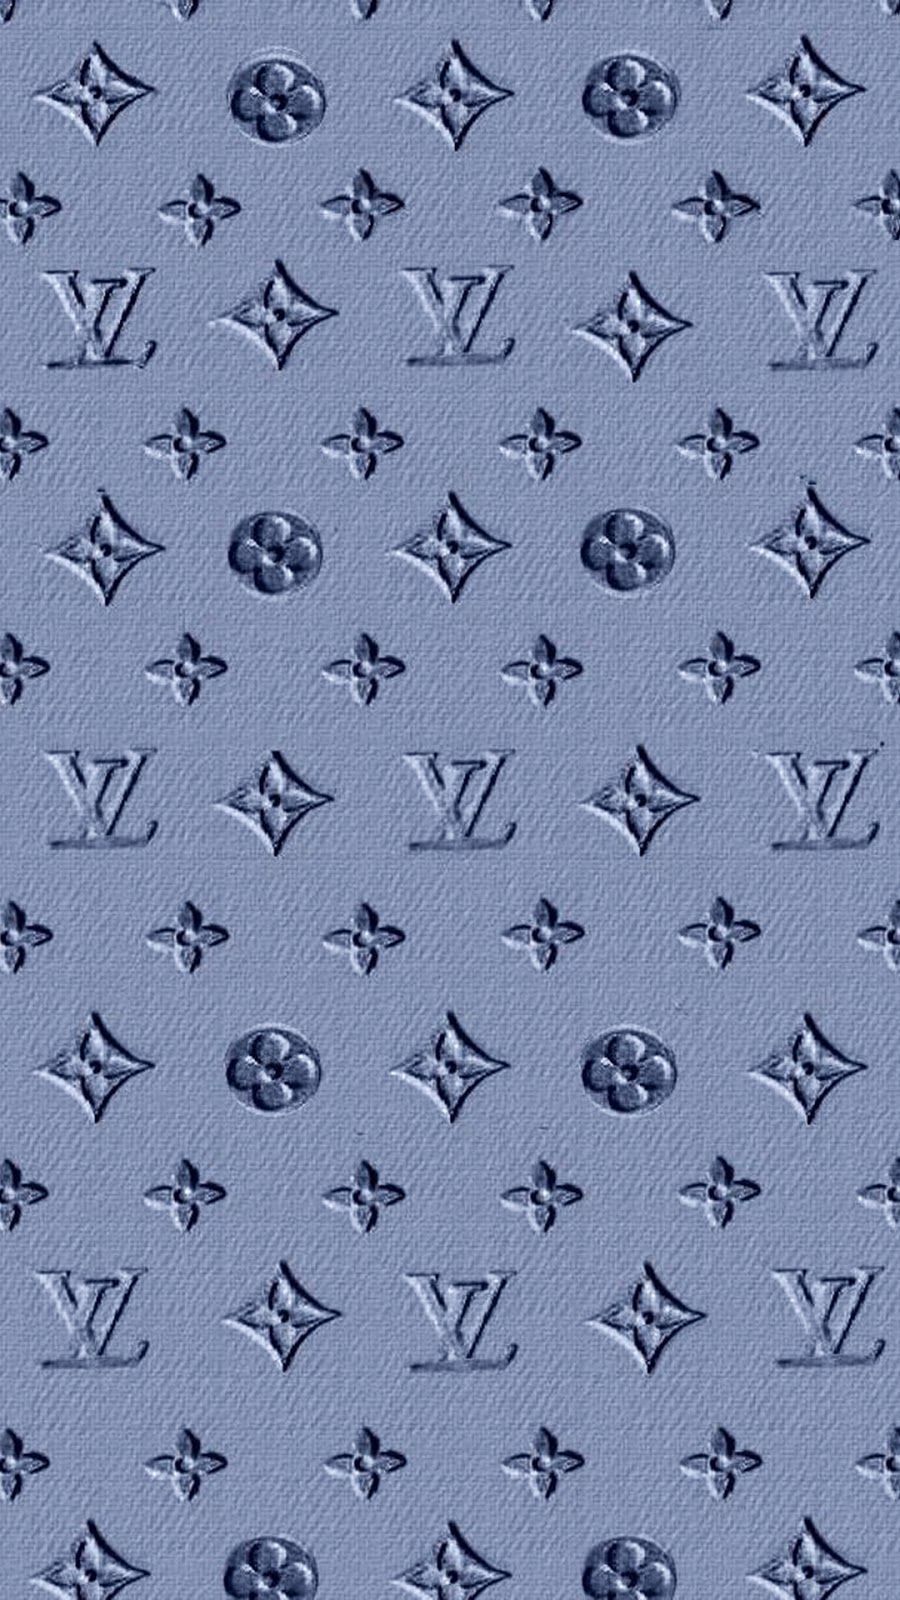 26+] Louis Vuitton Phone Wallpapers